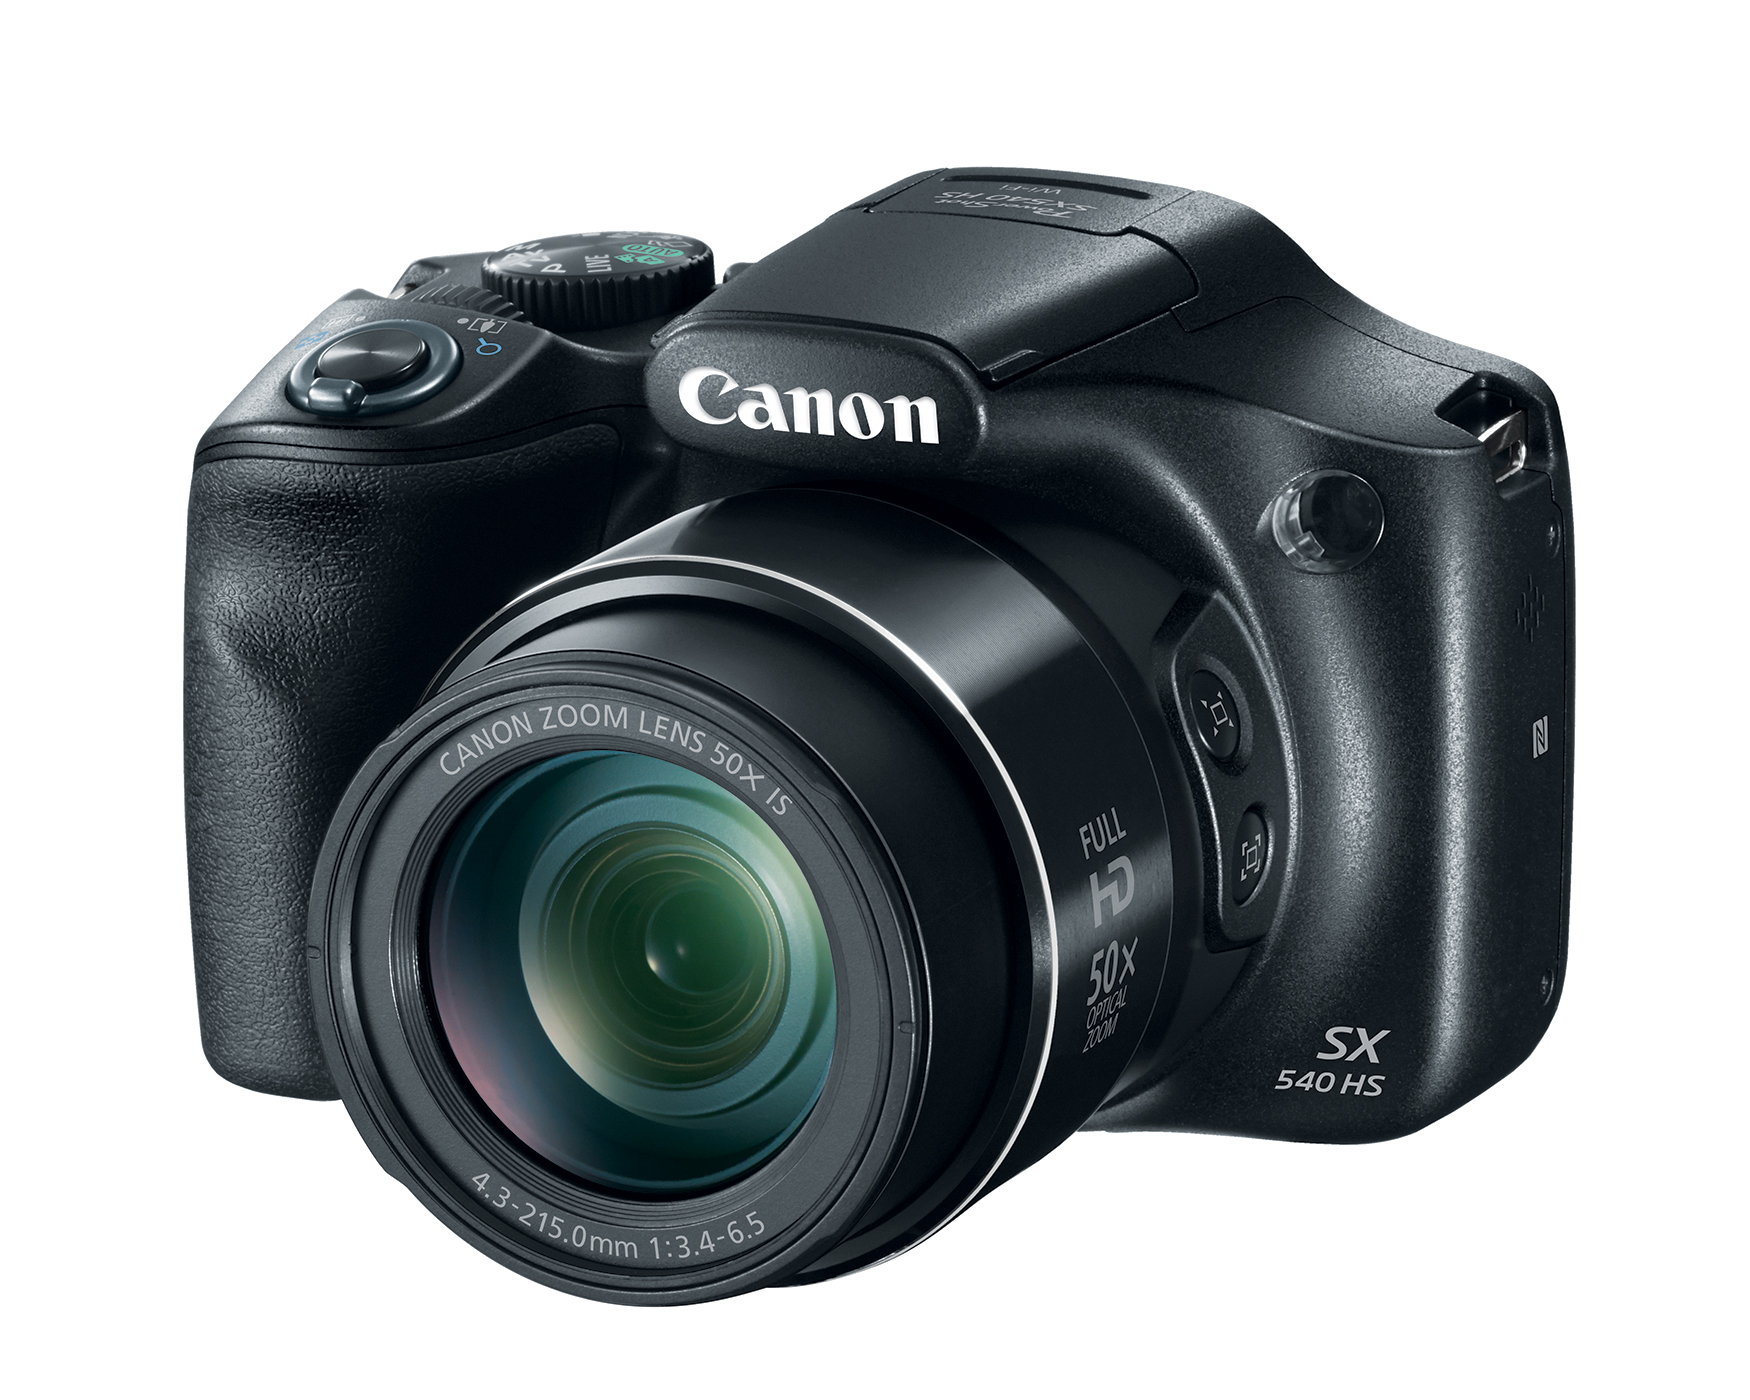 CES 2016: Canon's New Cameras, and Printer